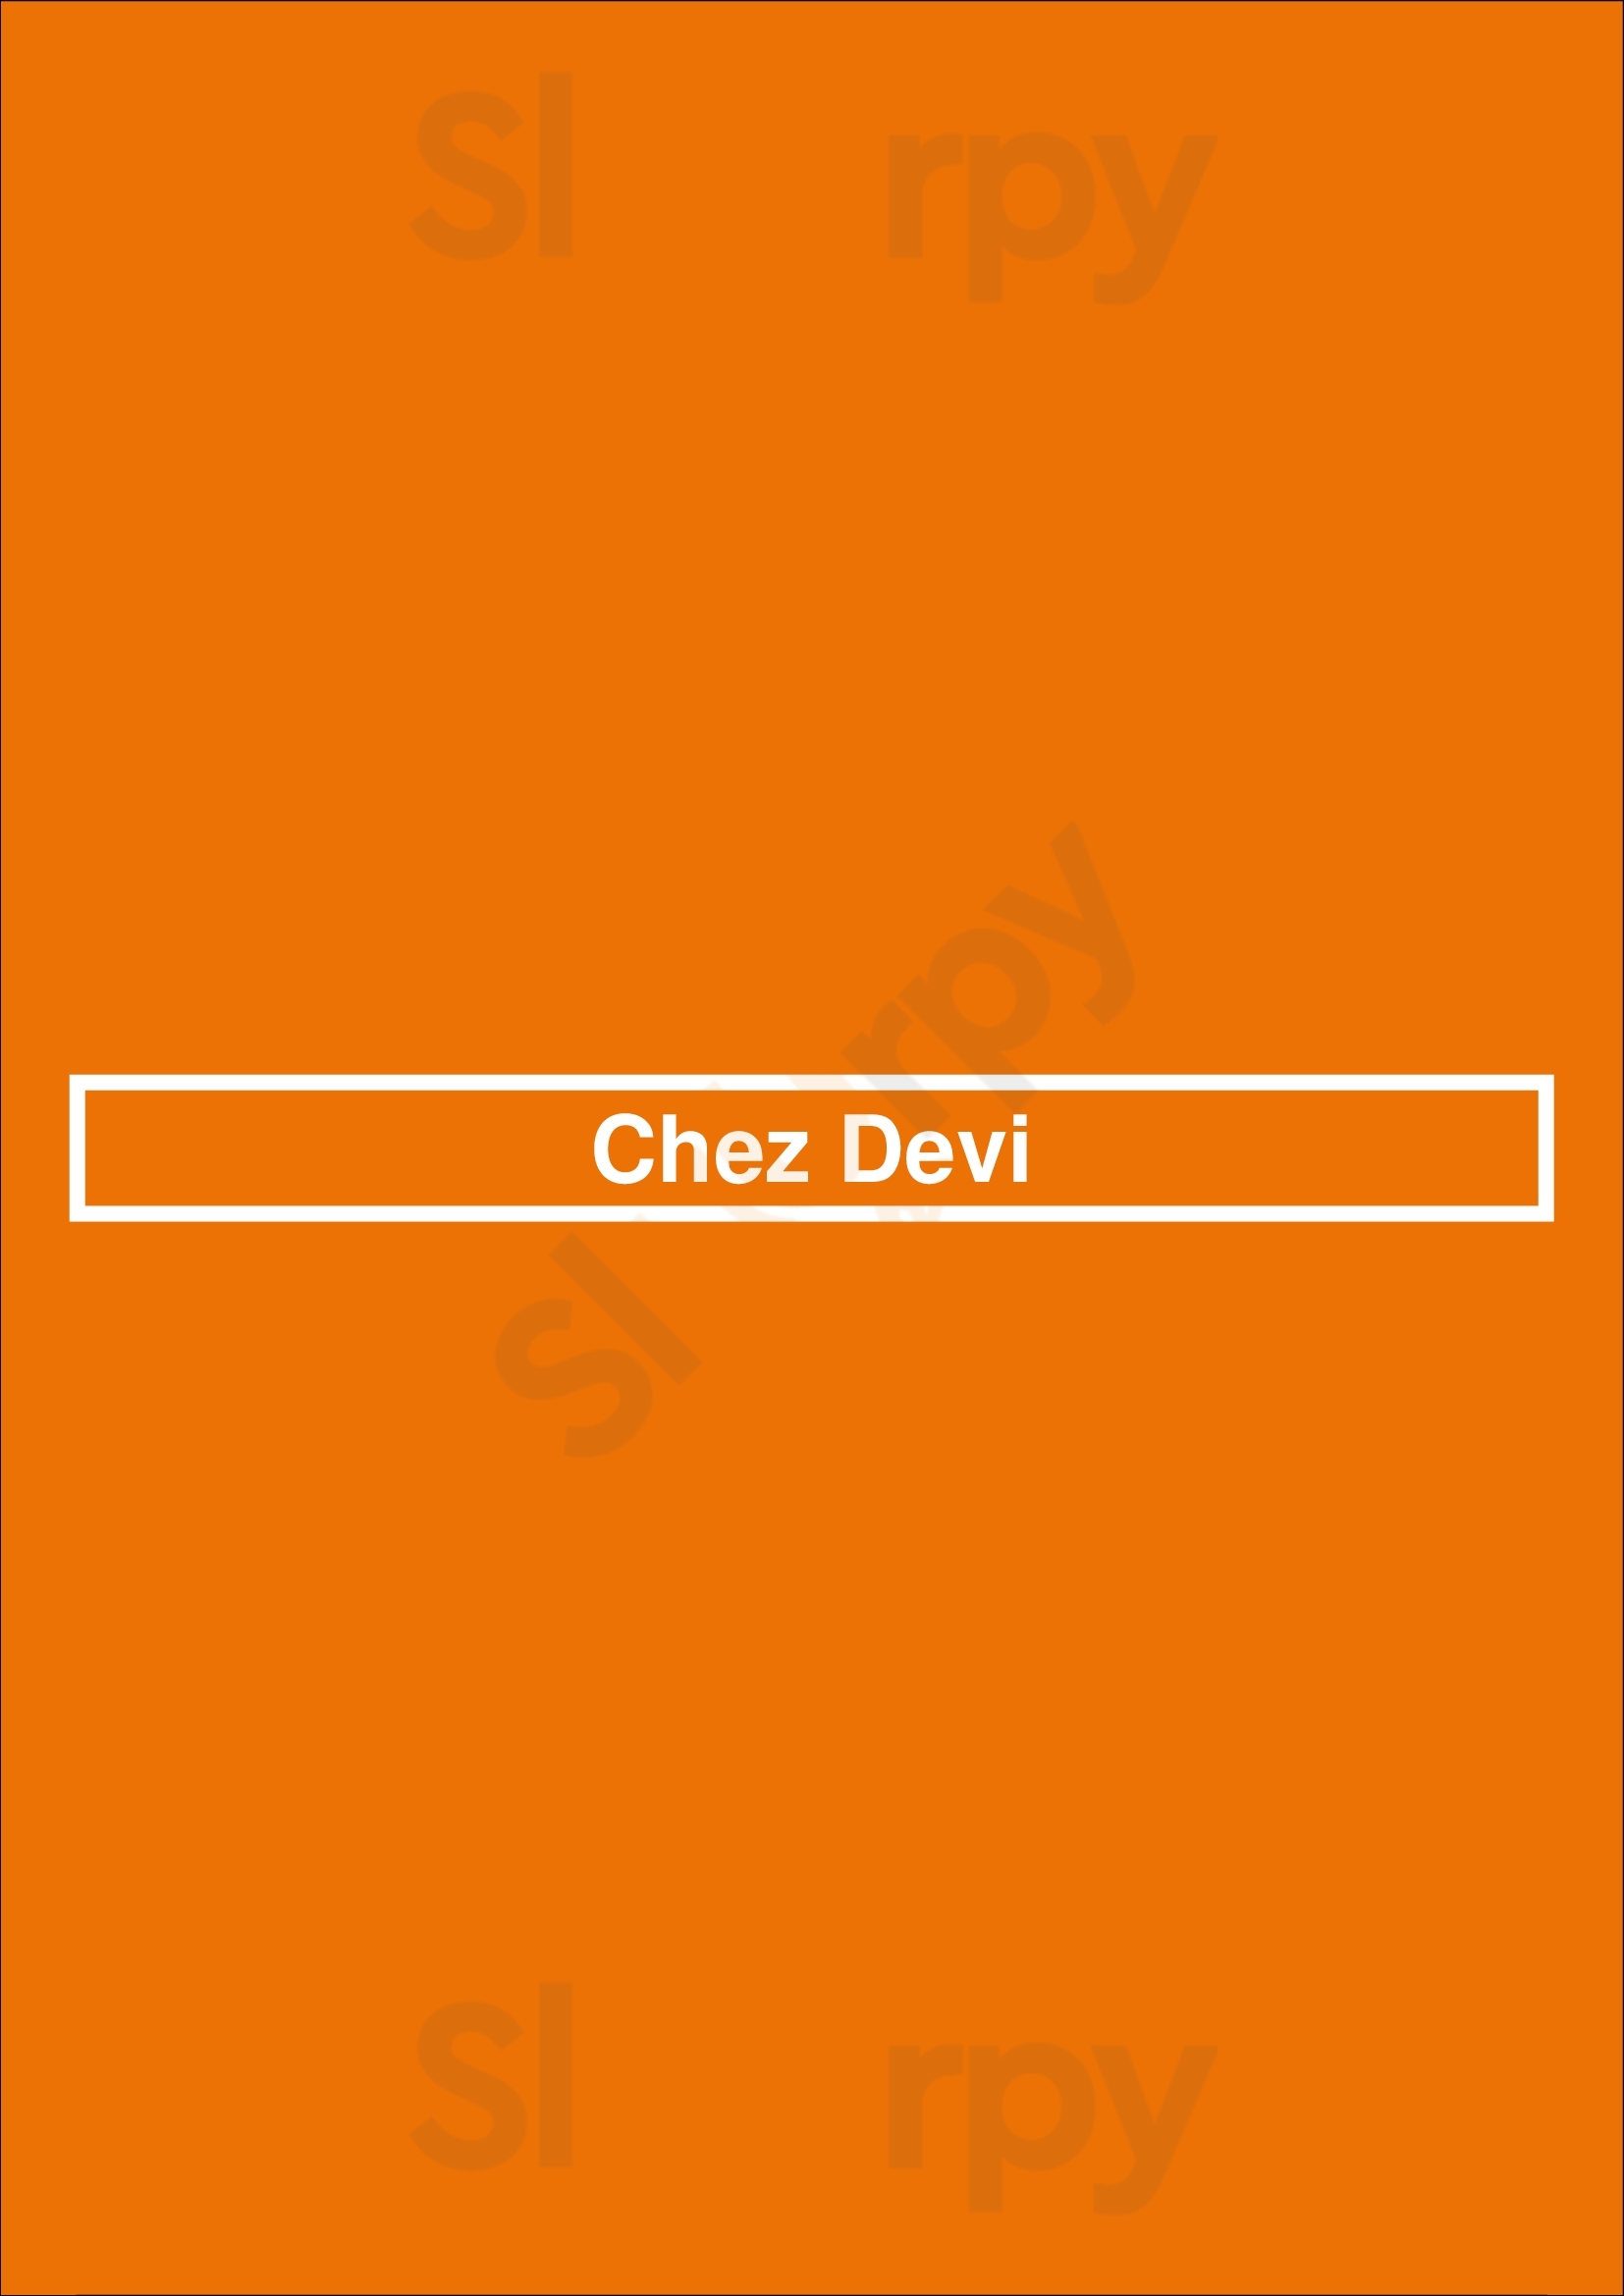 Chez Devi Montreal Menu - 1